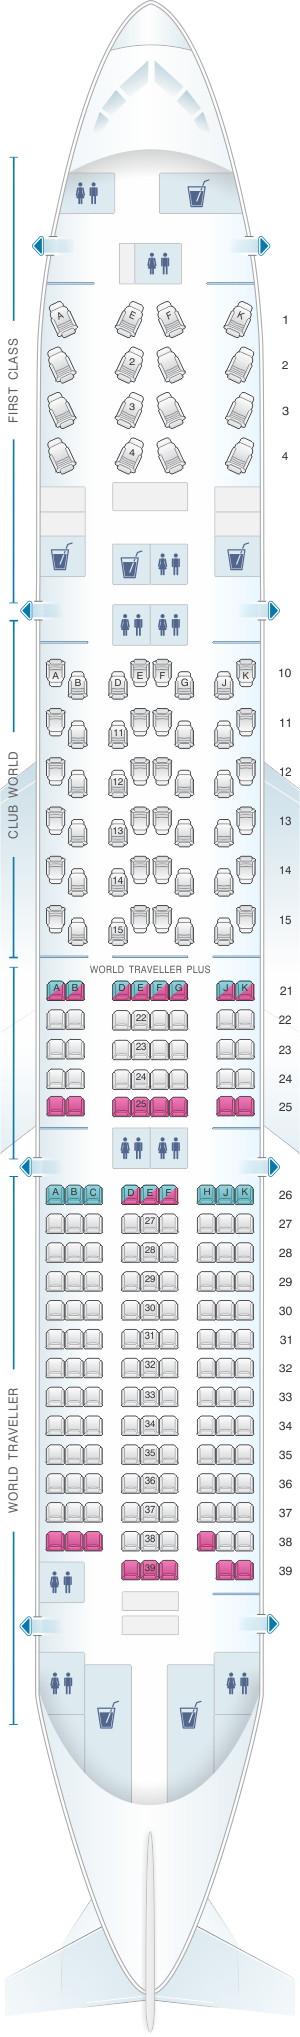 New Ba 777 Seat Map - Ashely Nicoline